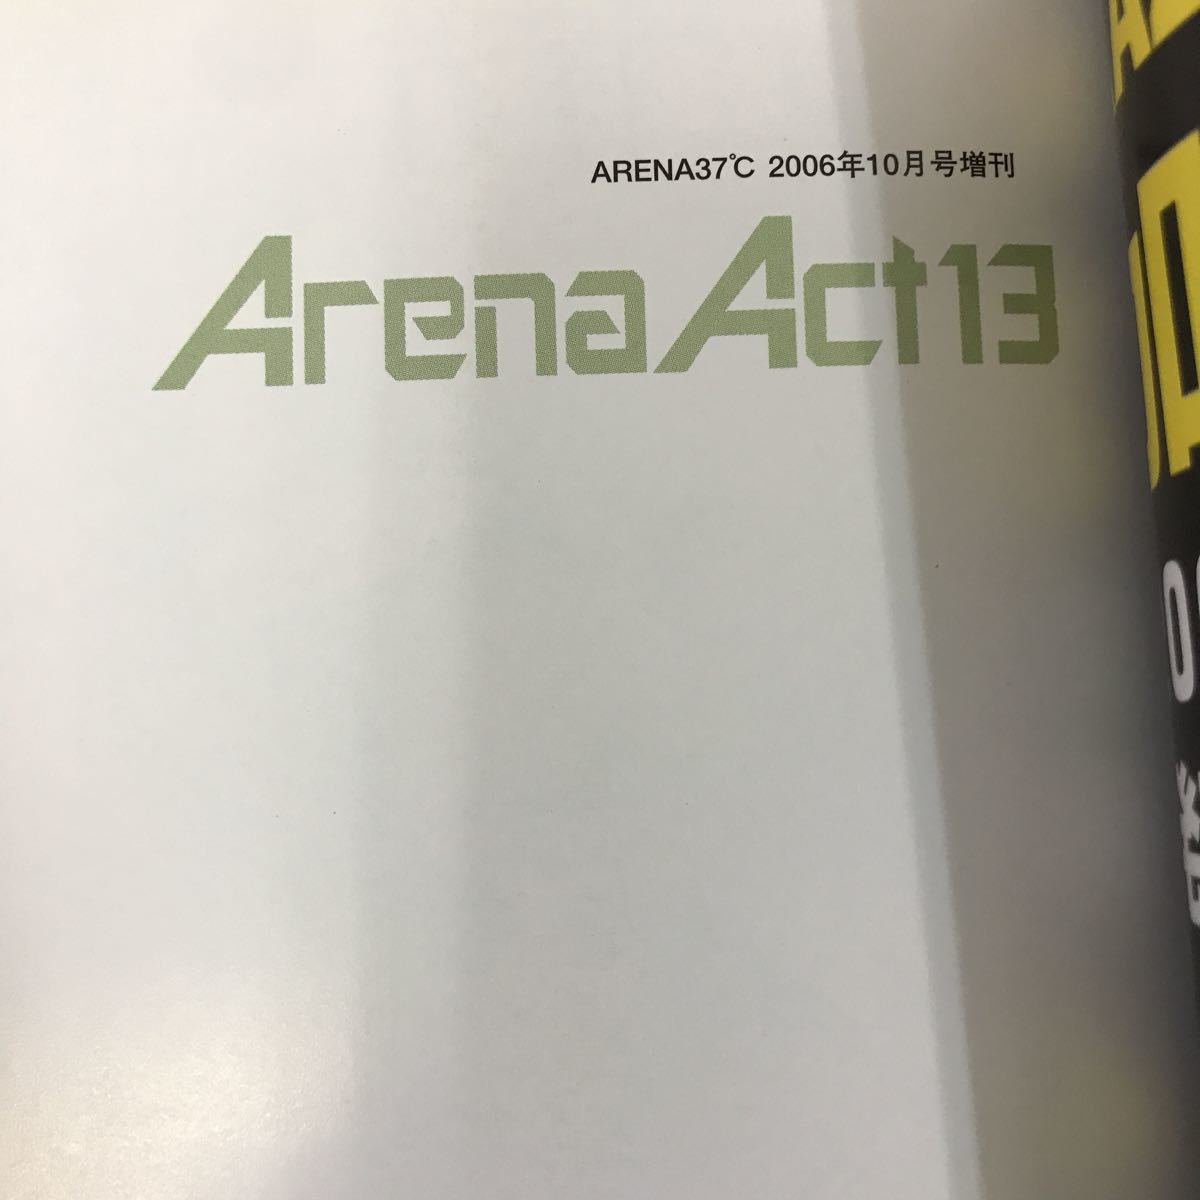 B18-015 ARENA37℃2006年10月号増刊 Arena Act 13 表紙 RAG FAIR 付録無し 音楽専科社_画像9